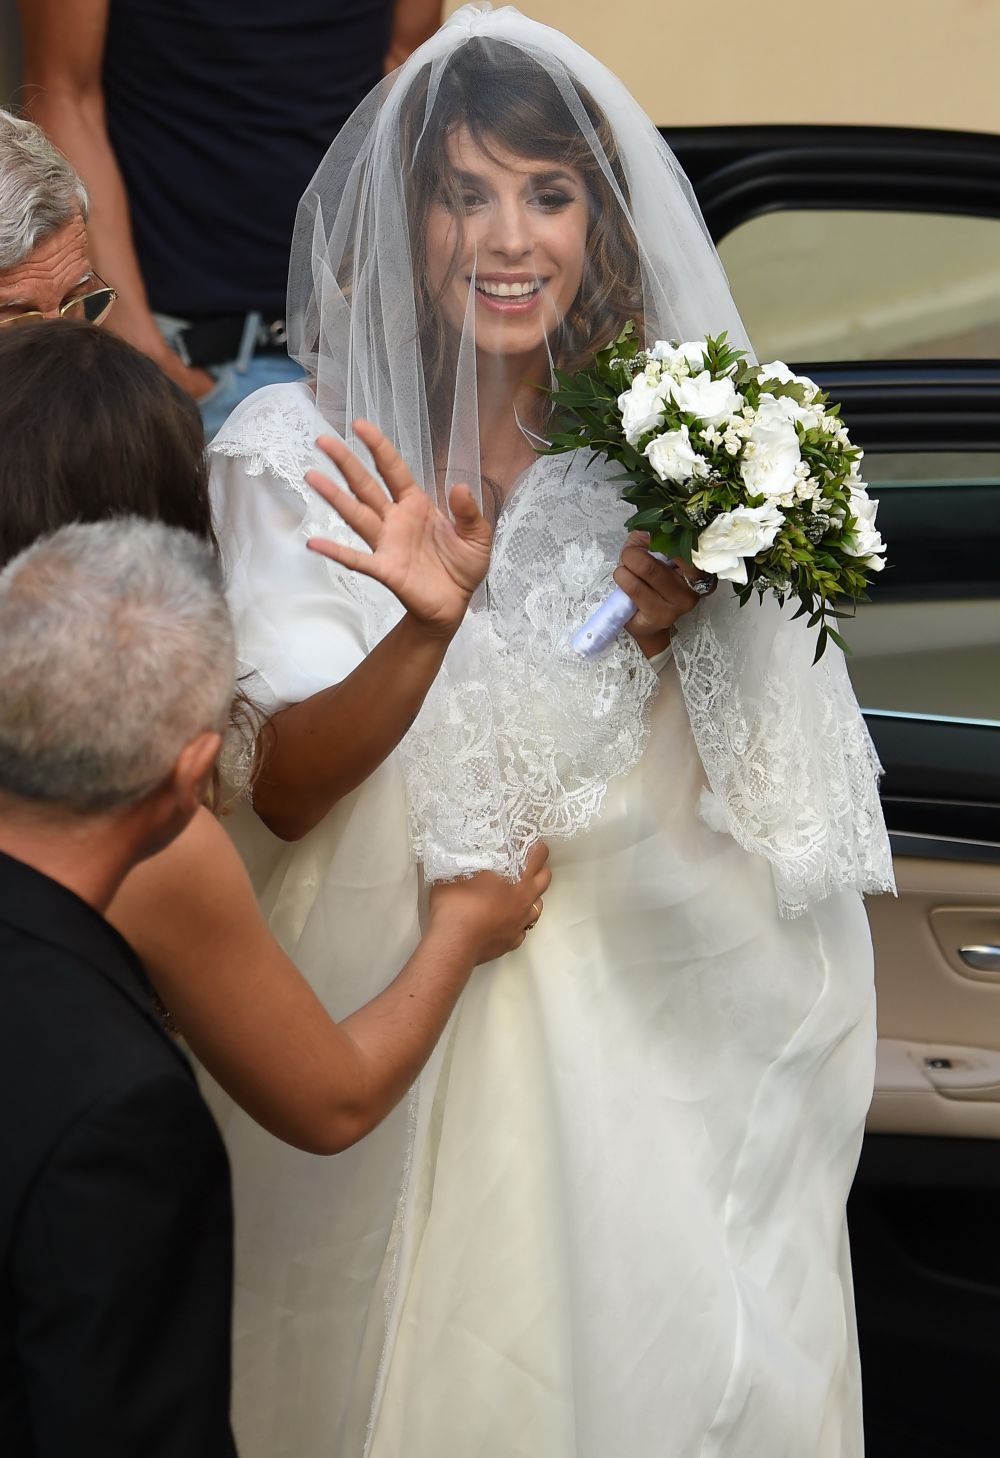 Fosta iubita a lui George Clooney s-a casatorit. Cat de frumoasa a fost Elisabetta Canalis in rochie de mireasa